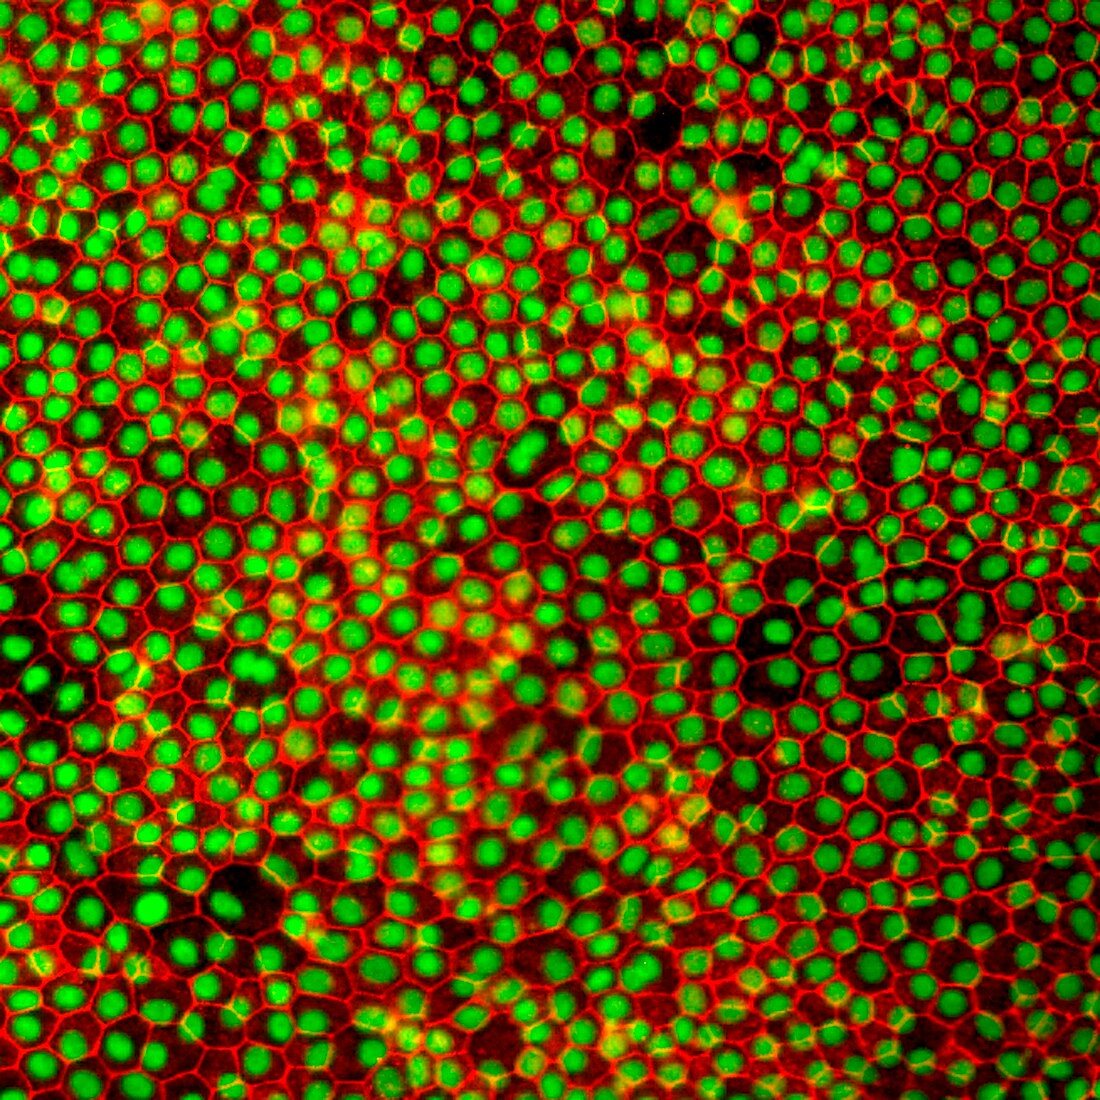 Stem cell-derived retinal cells